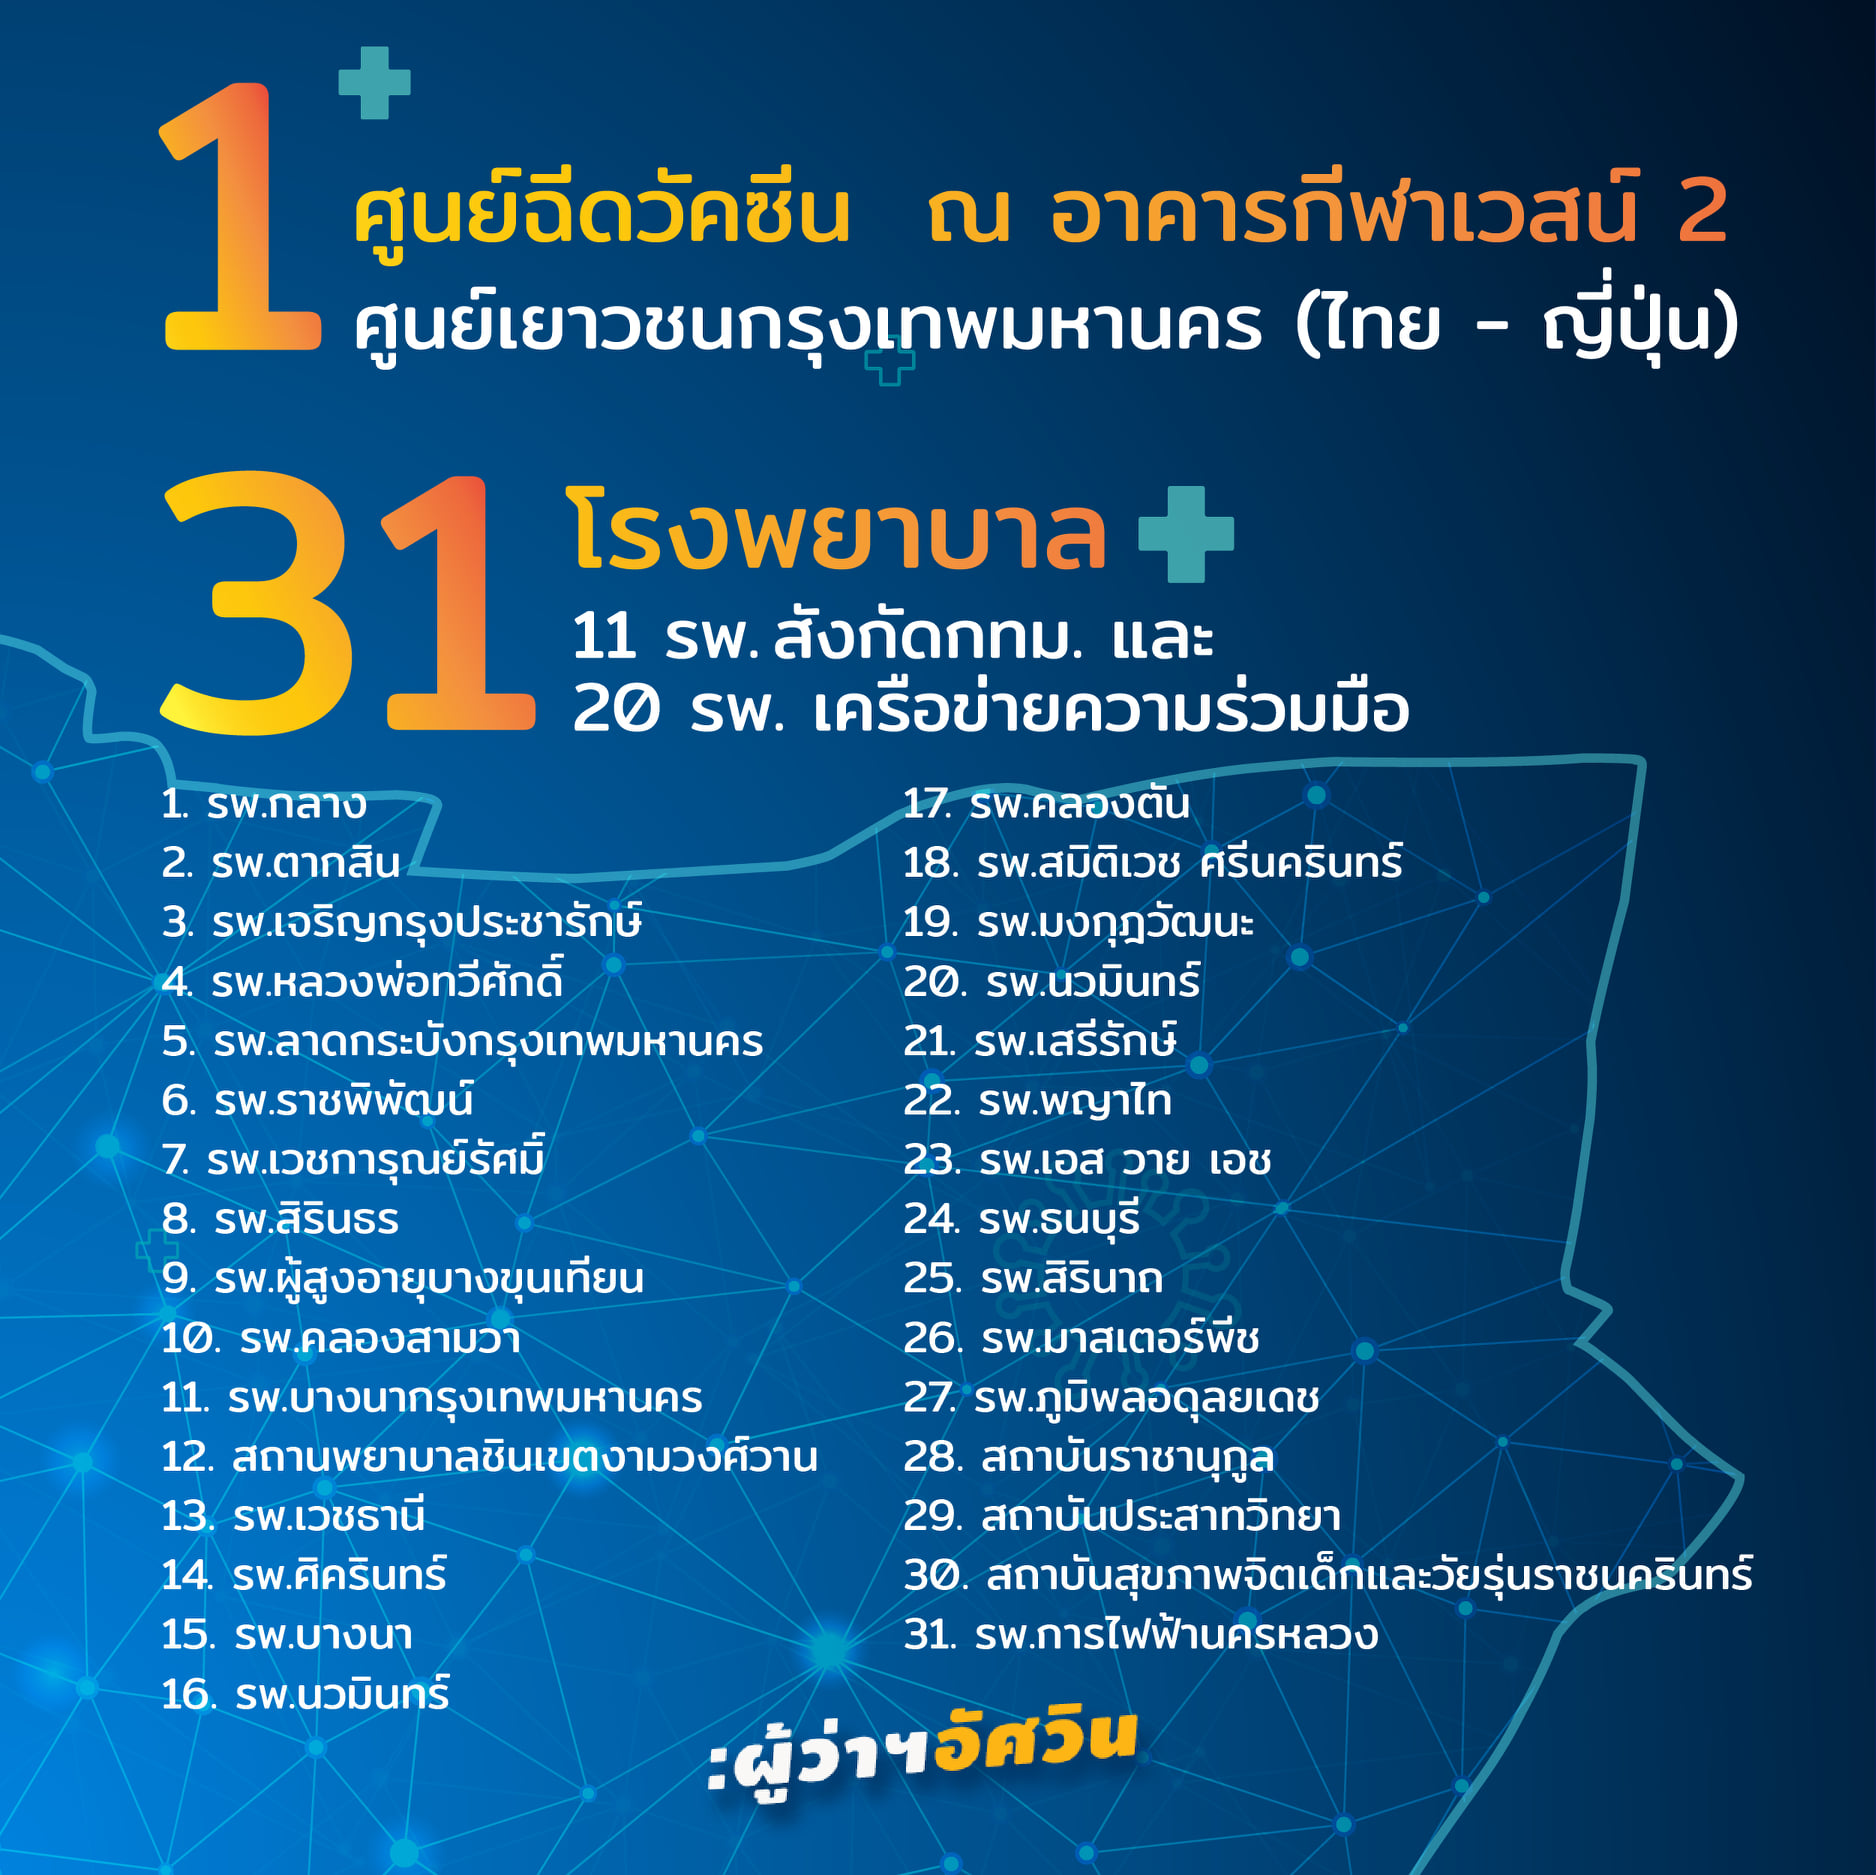 101-bkk-vaccine-stations-1201